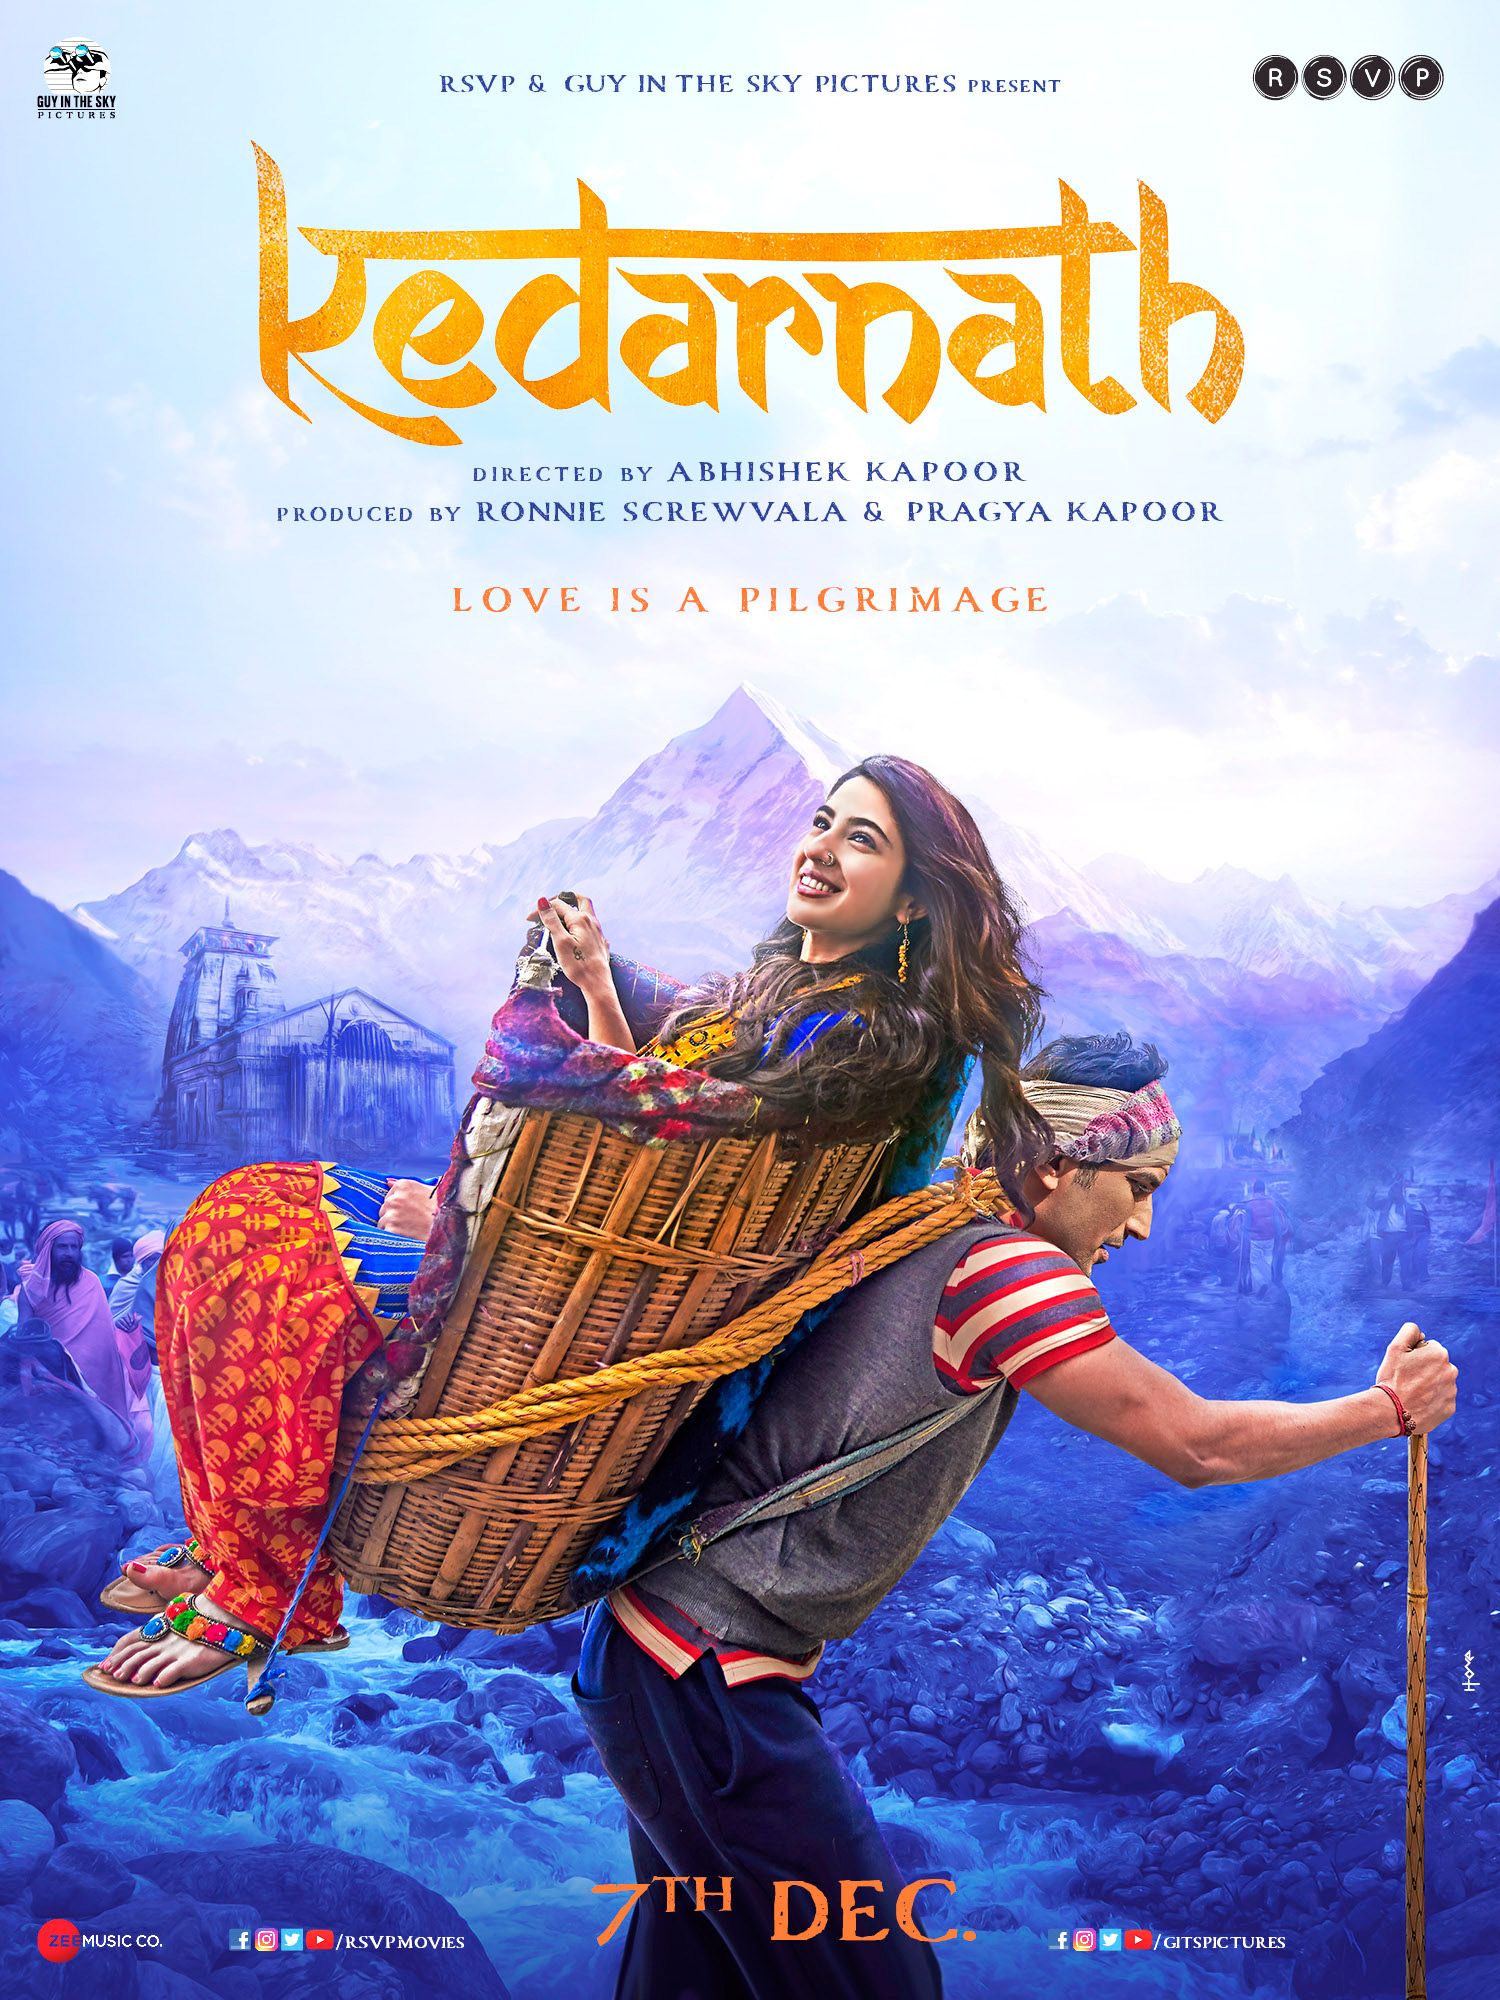 kedarnath movie download hd free